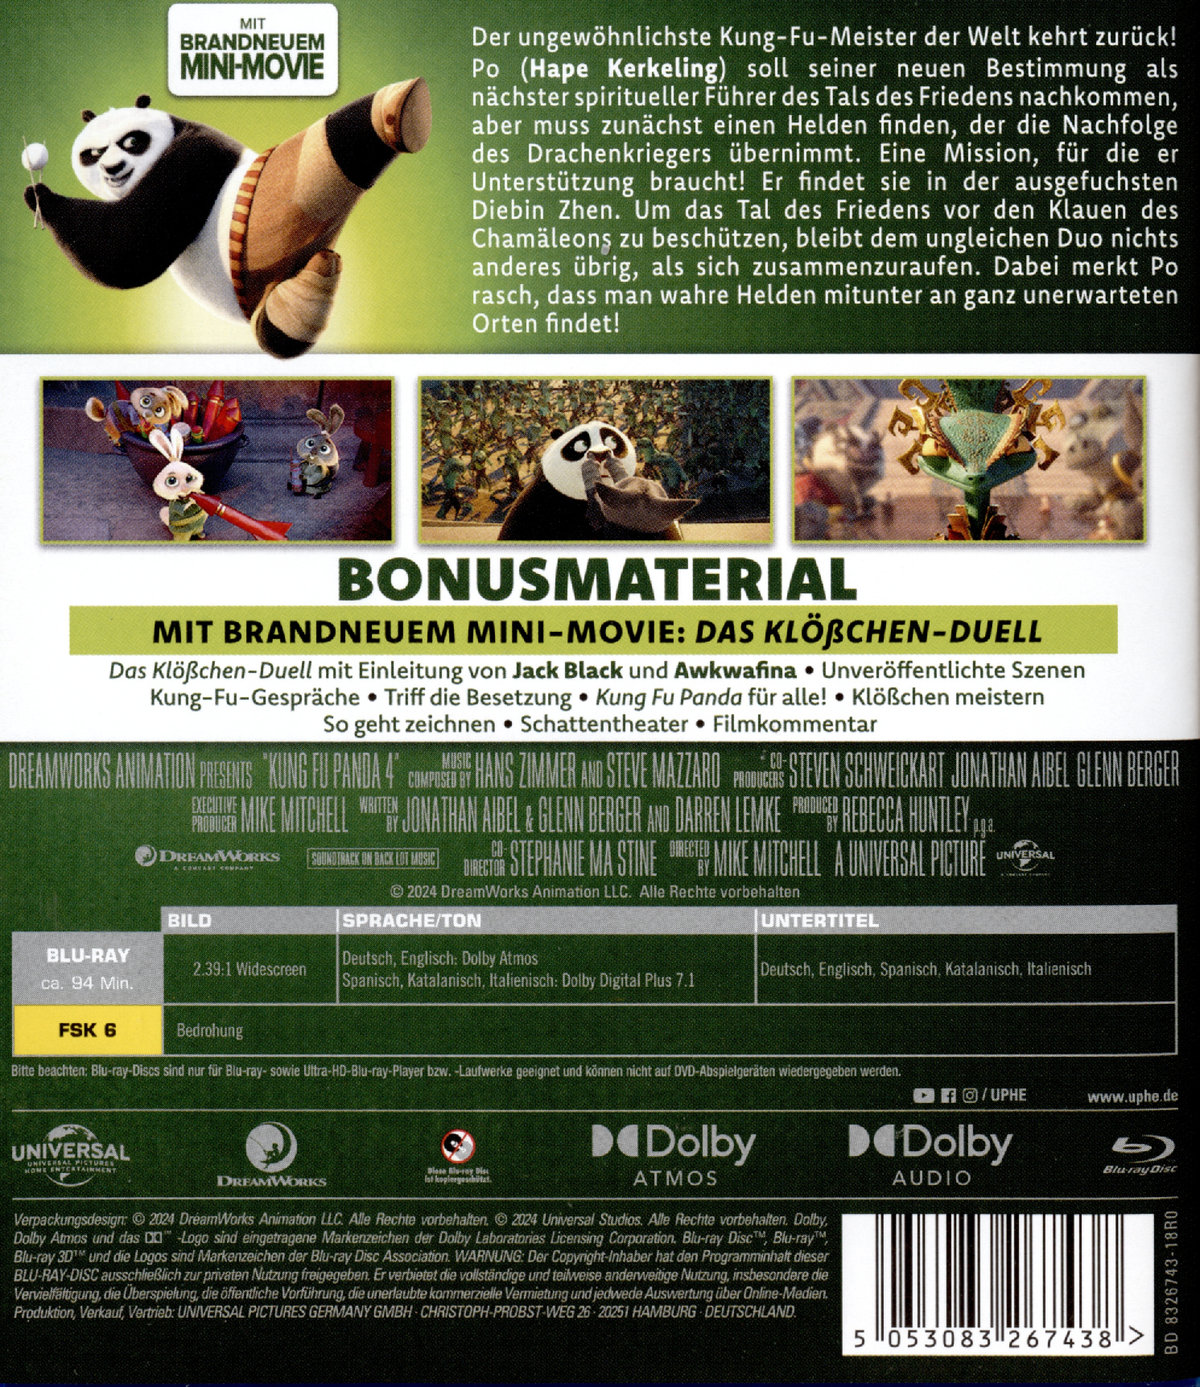 Kung Fu Panda 4  (Blu-ray Disc)